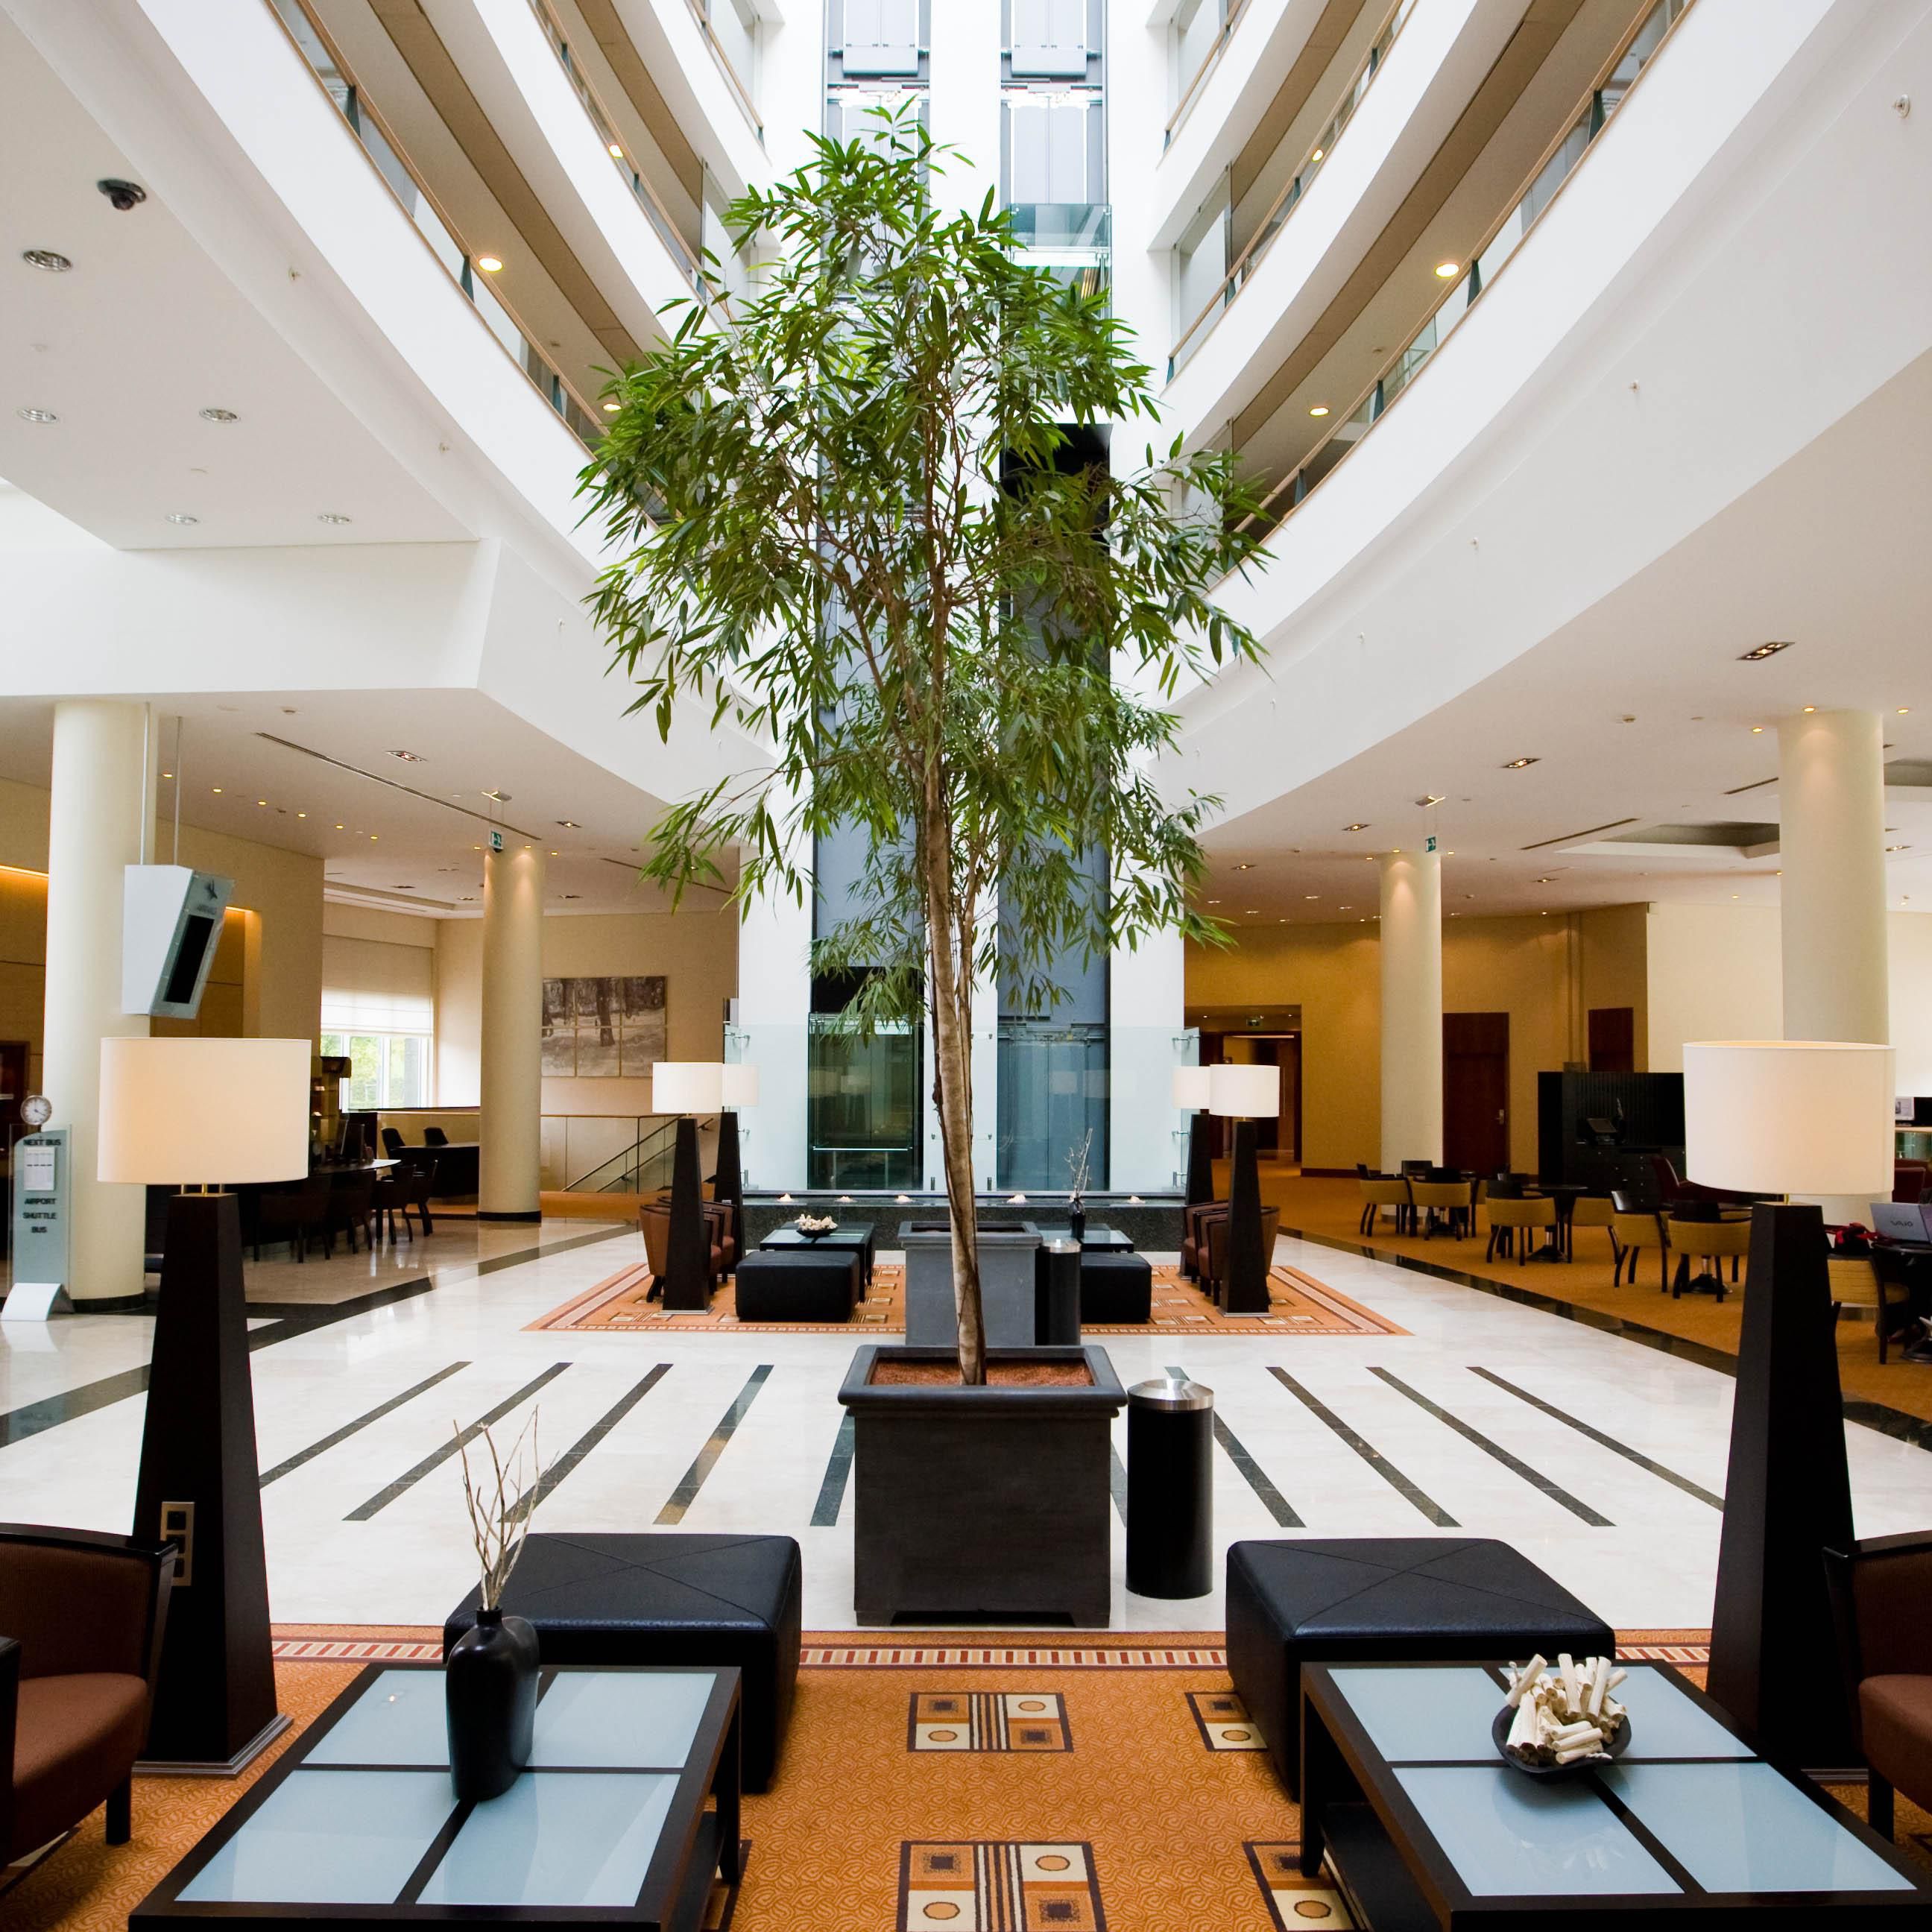 Hotel Lobby with fabulous atrium